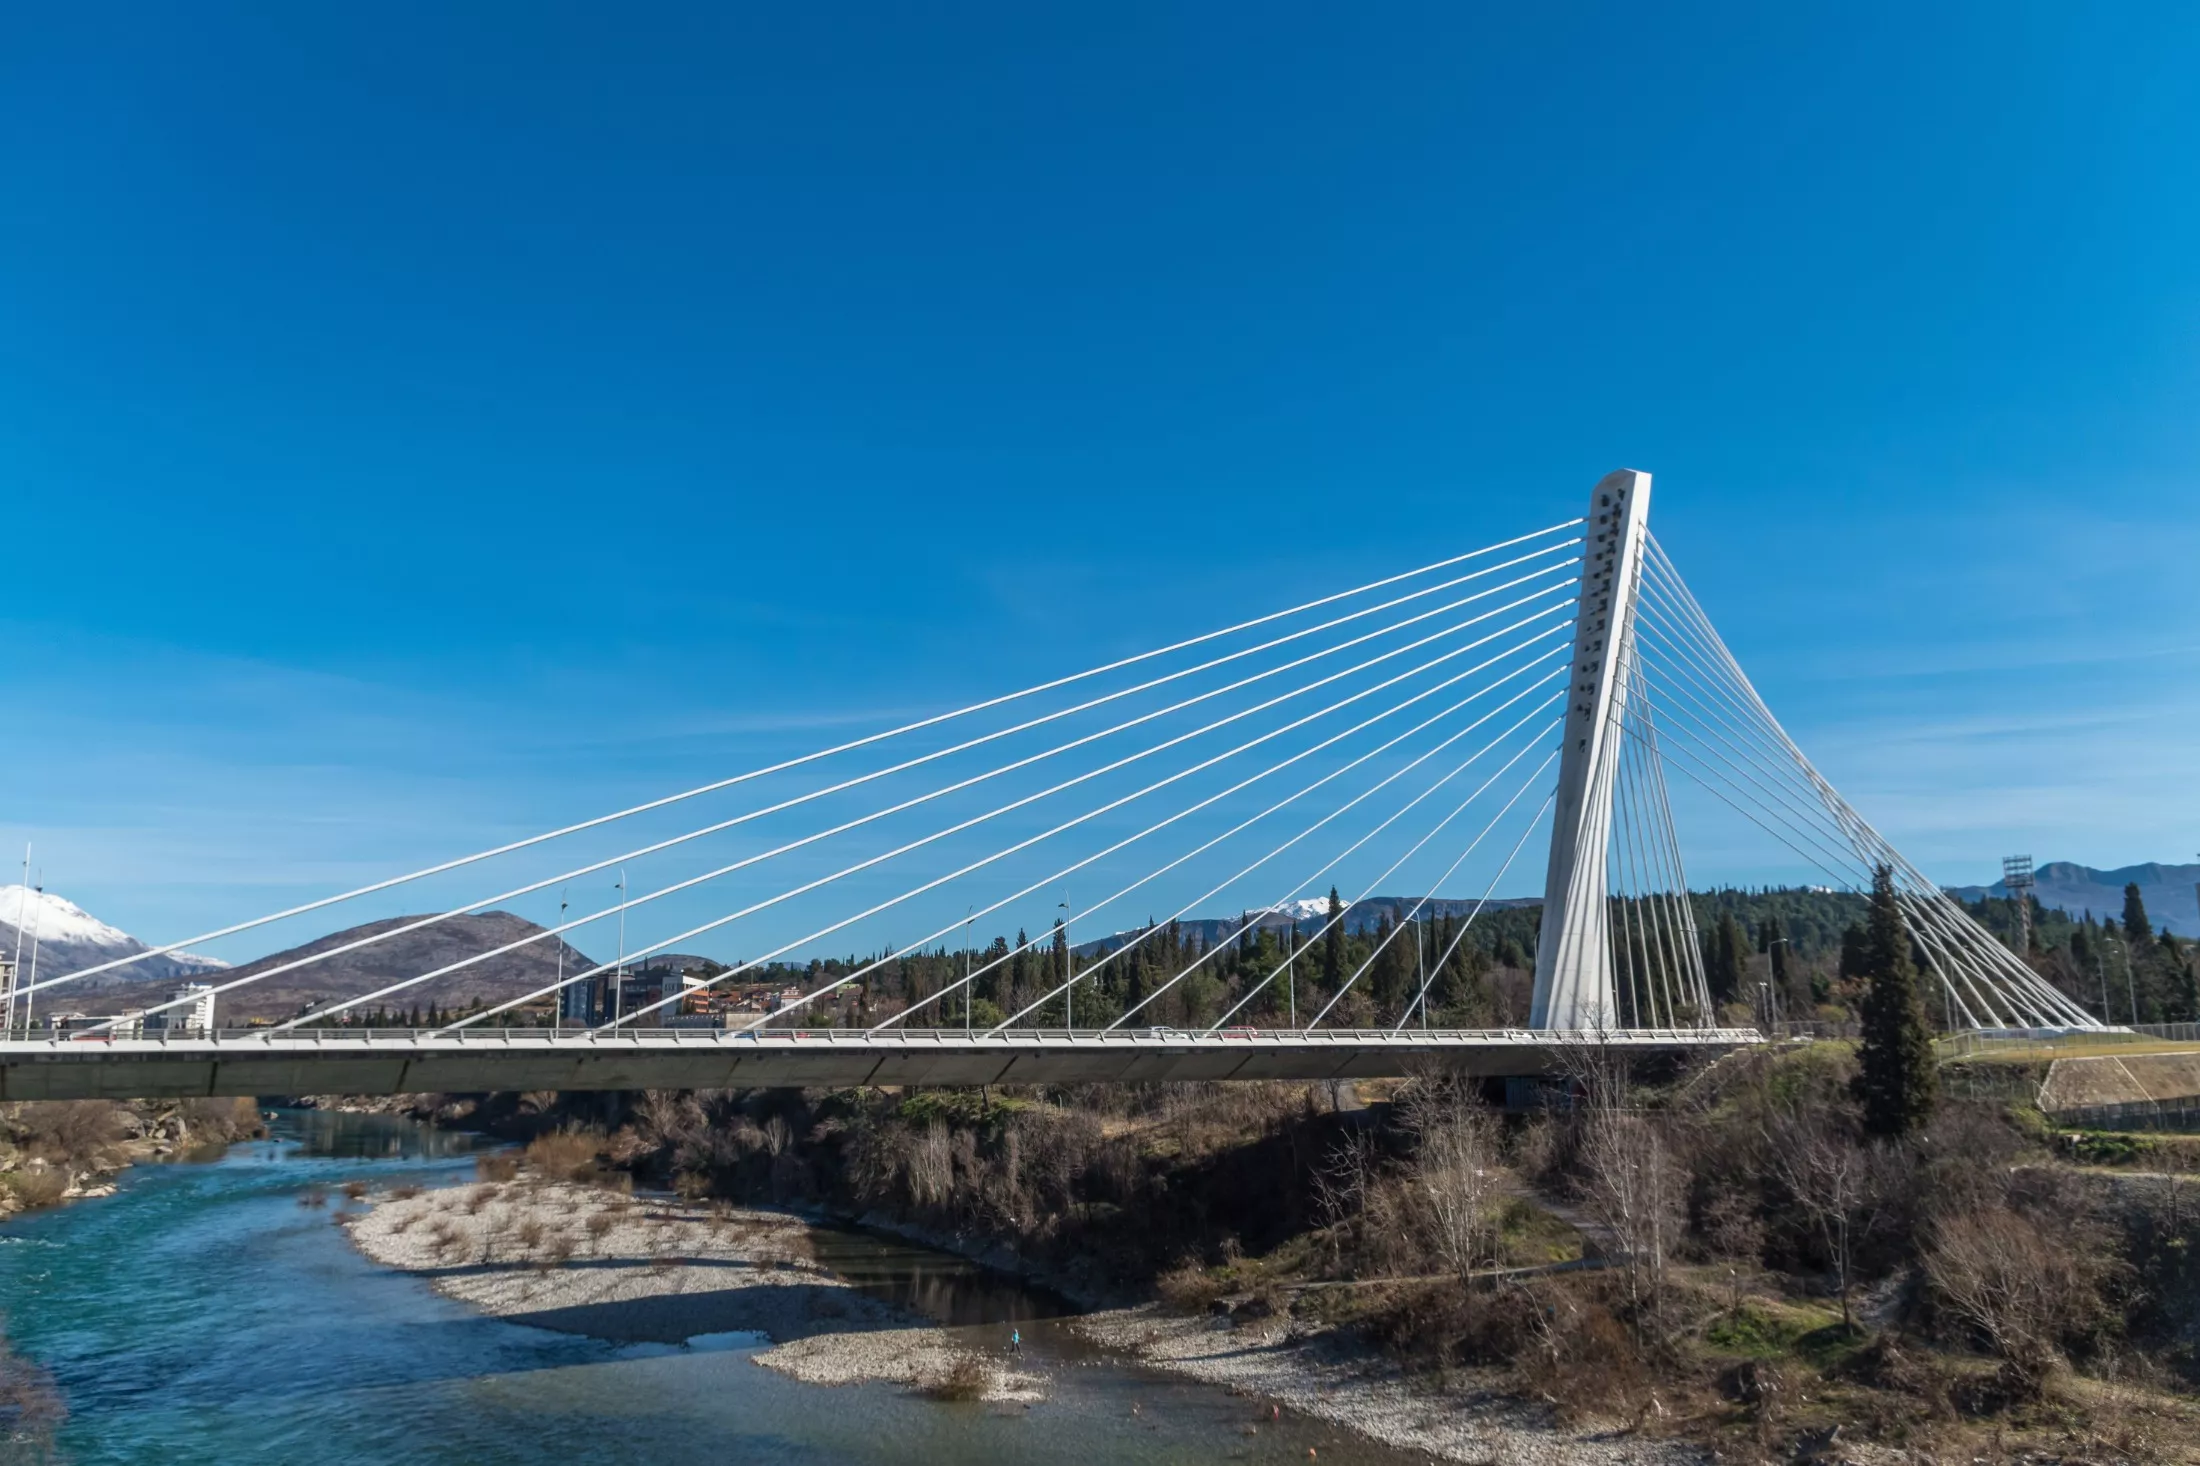 The Millennium Bridge in Podgorica - River Morača